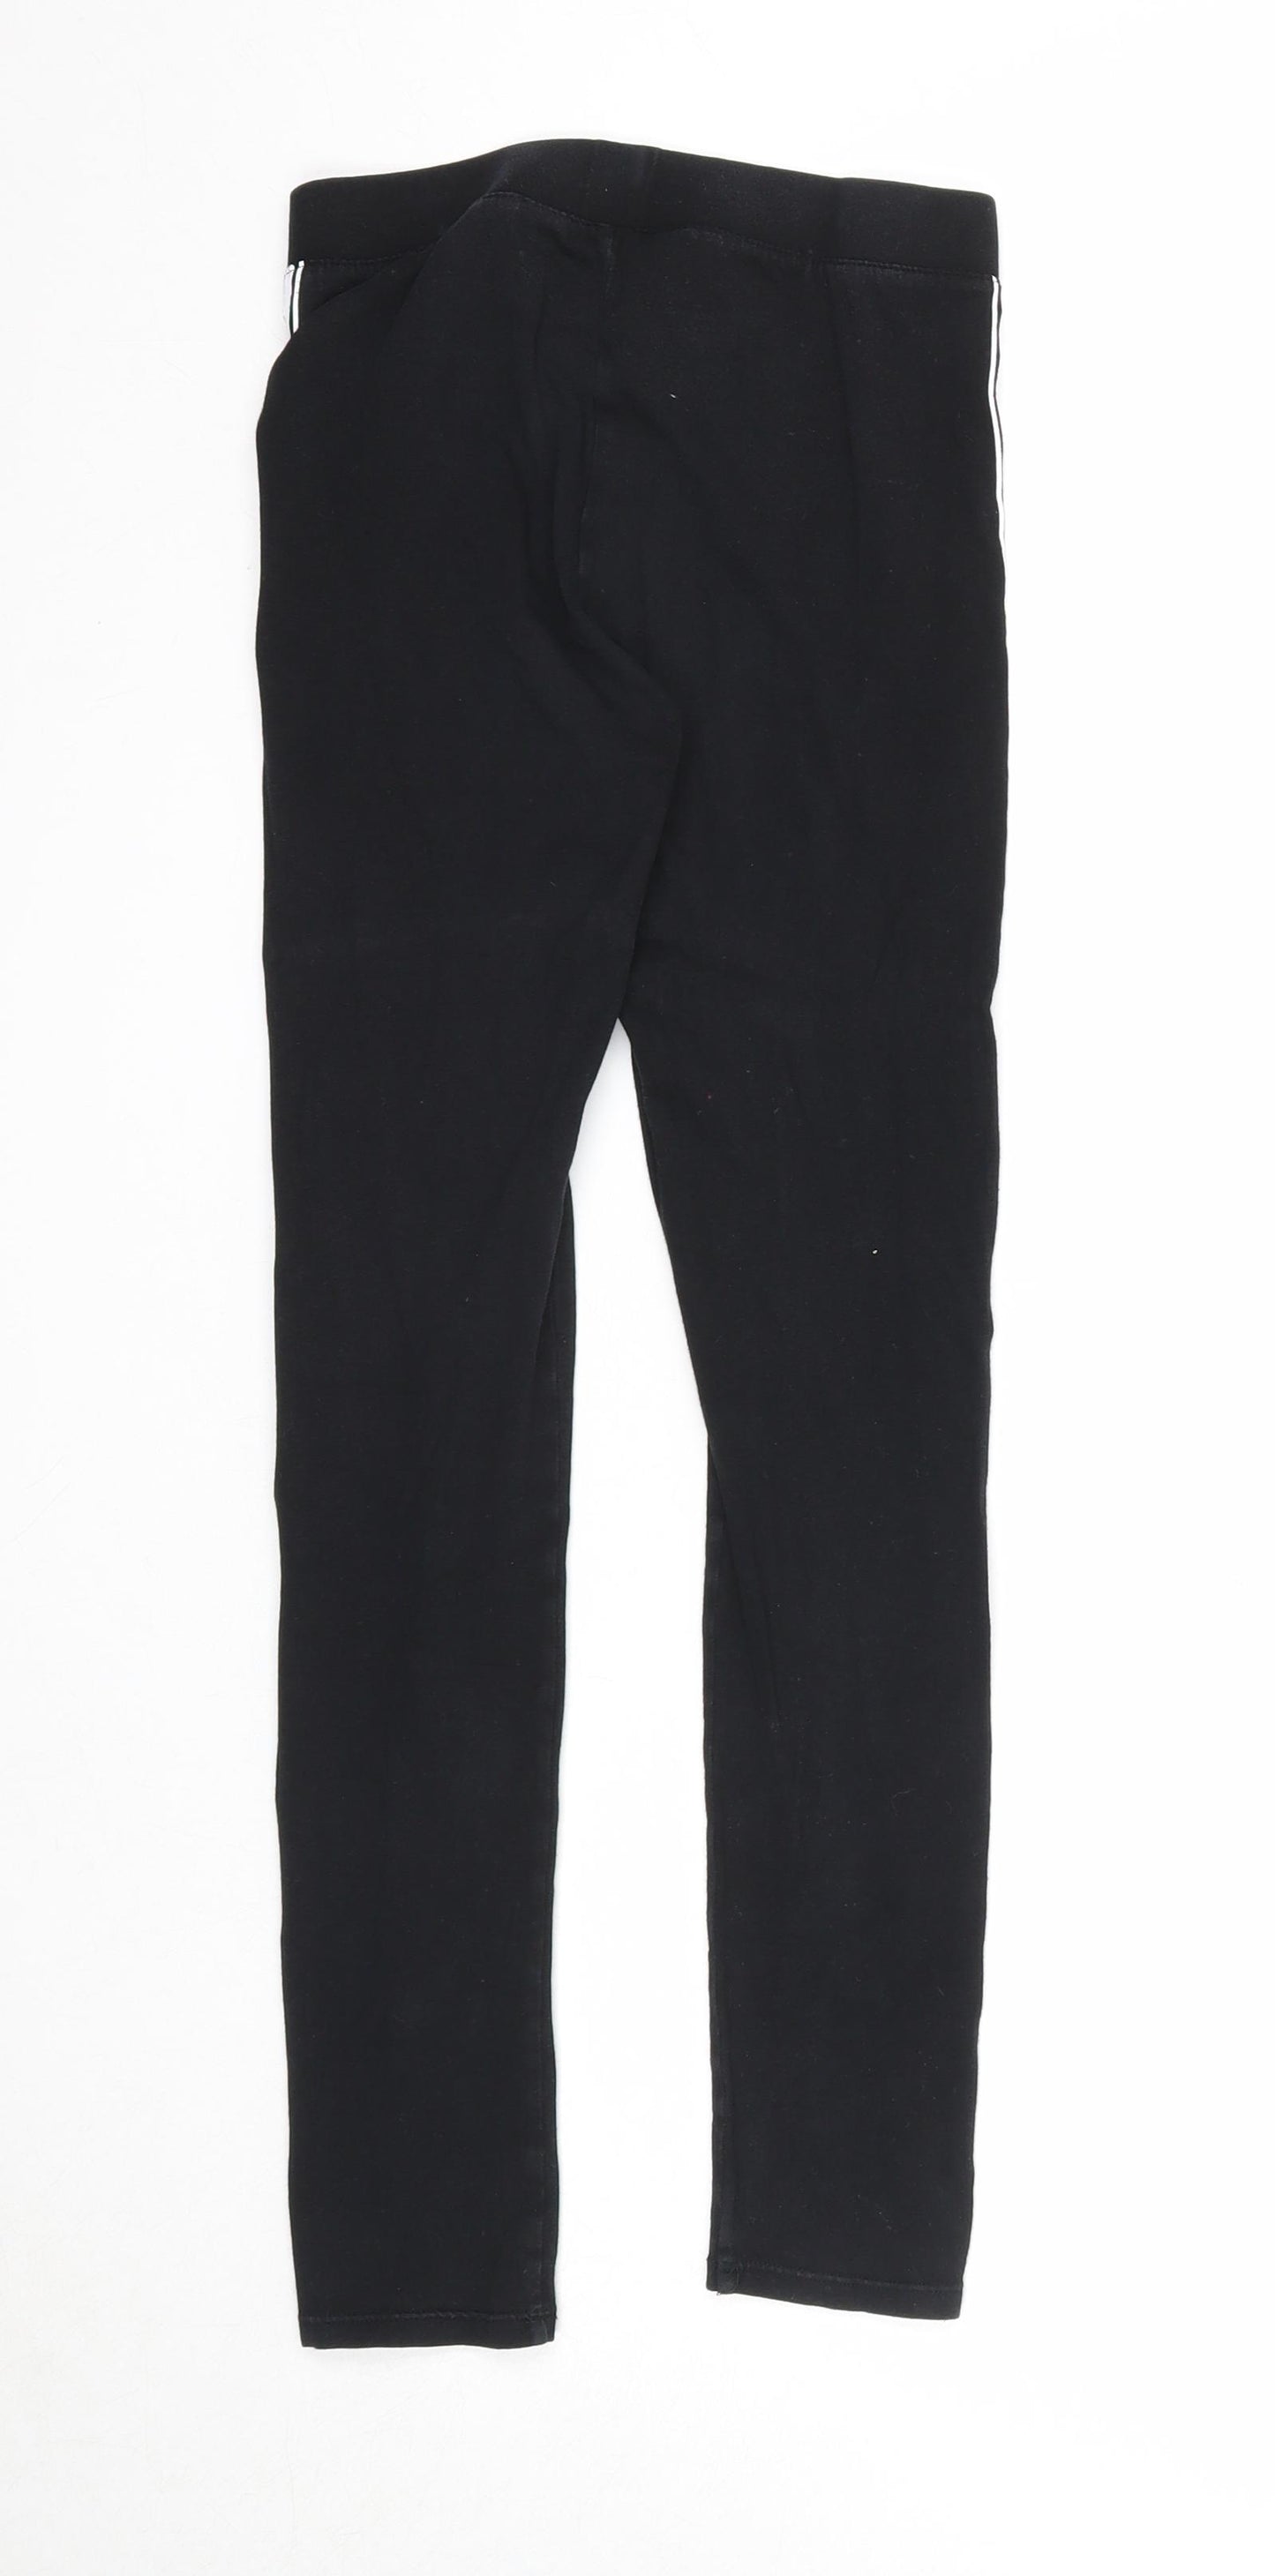 H&M Girls Black Cotton Jogger Trousers Size 11-12 Years Regular Pullover - Chicago Leggings